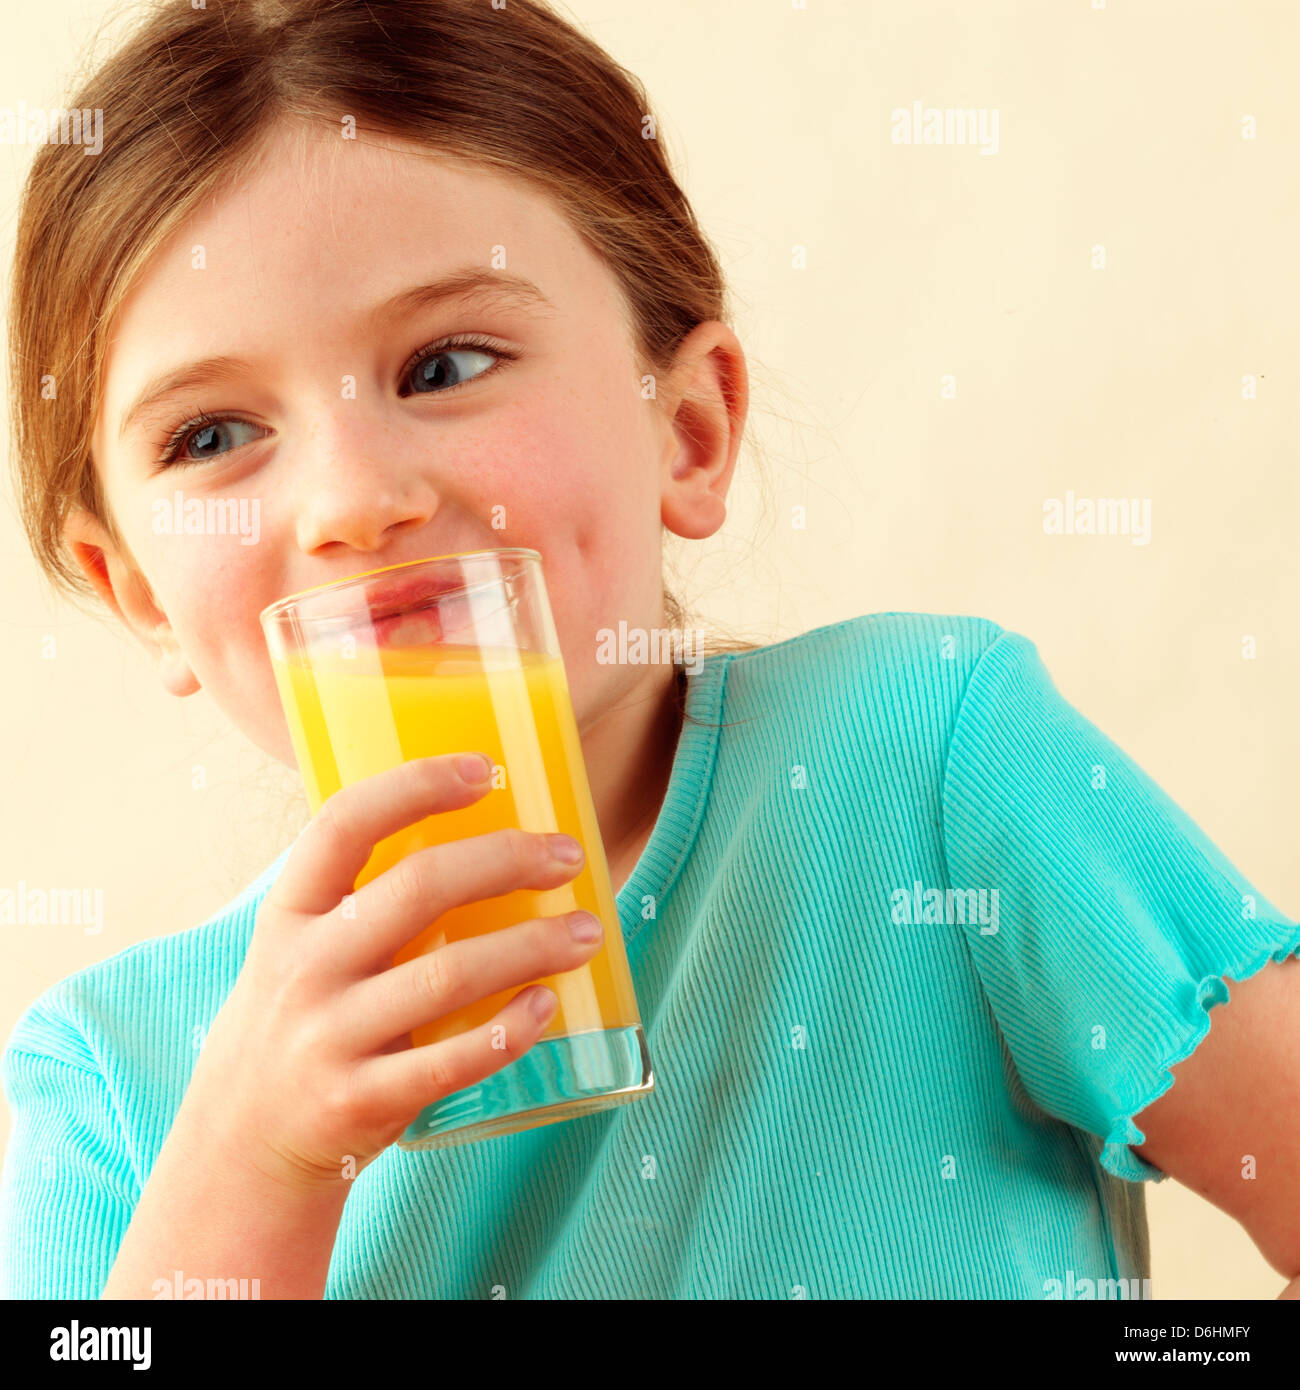 Girl drinking orange juice Stock Photo